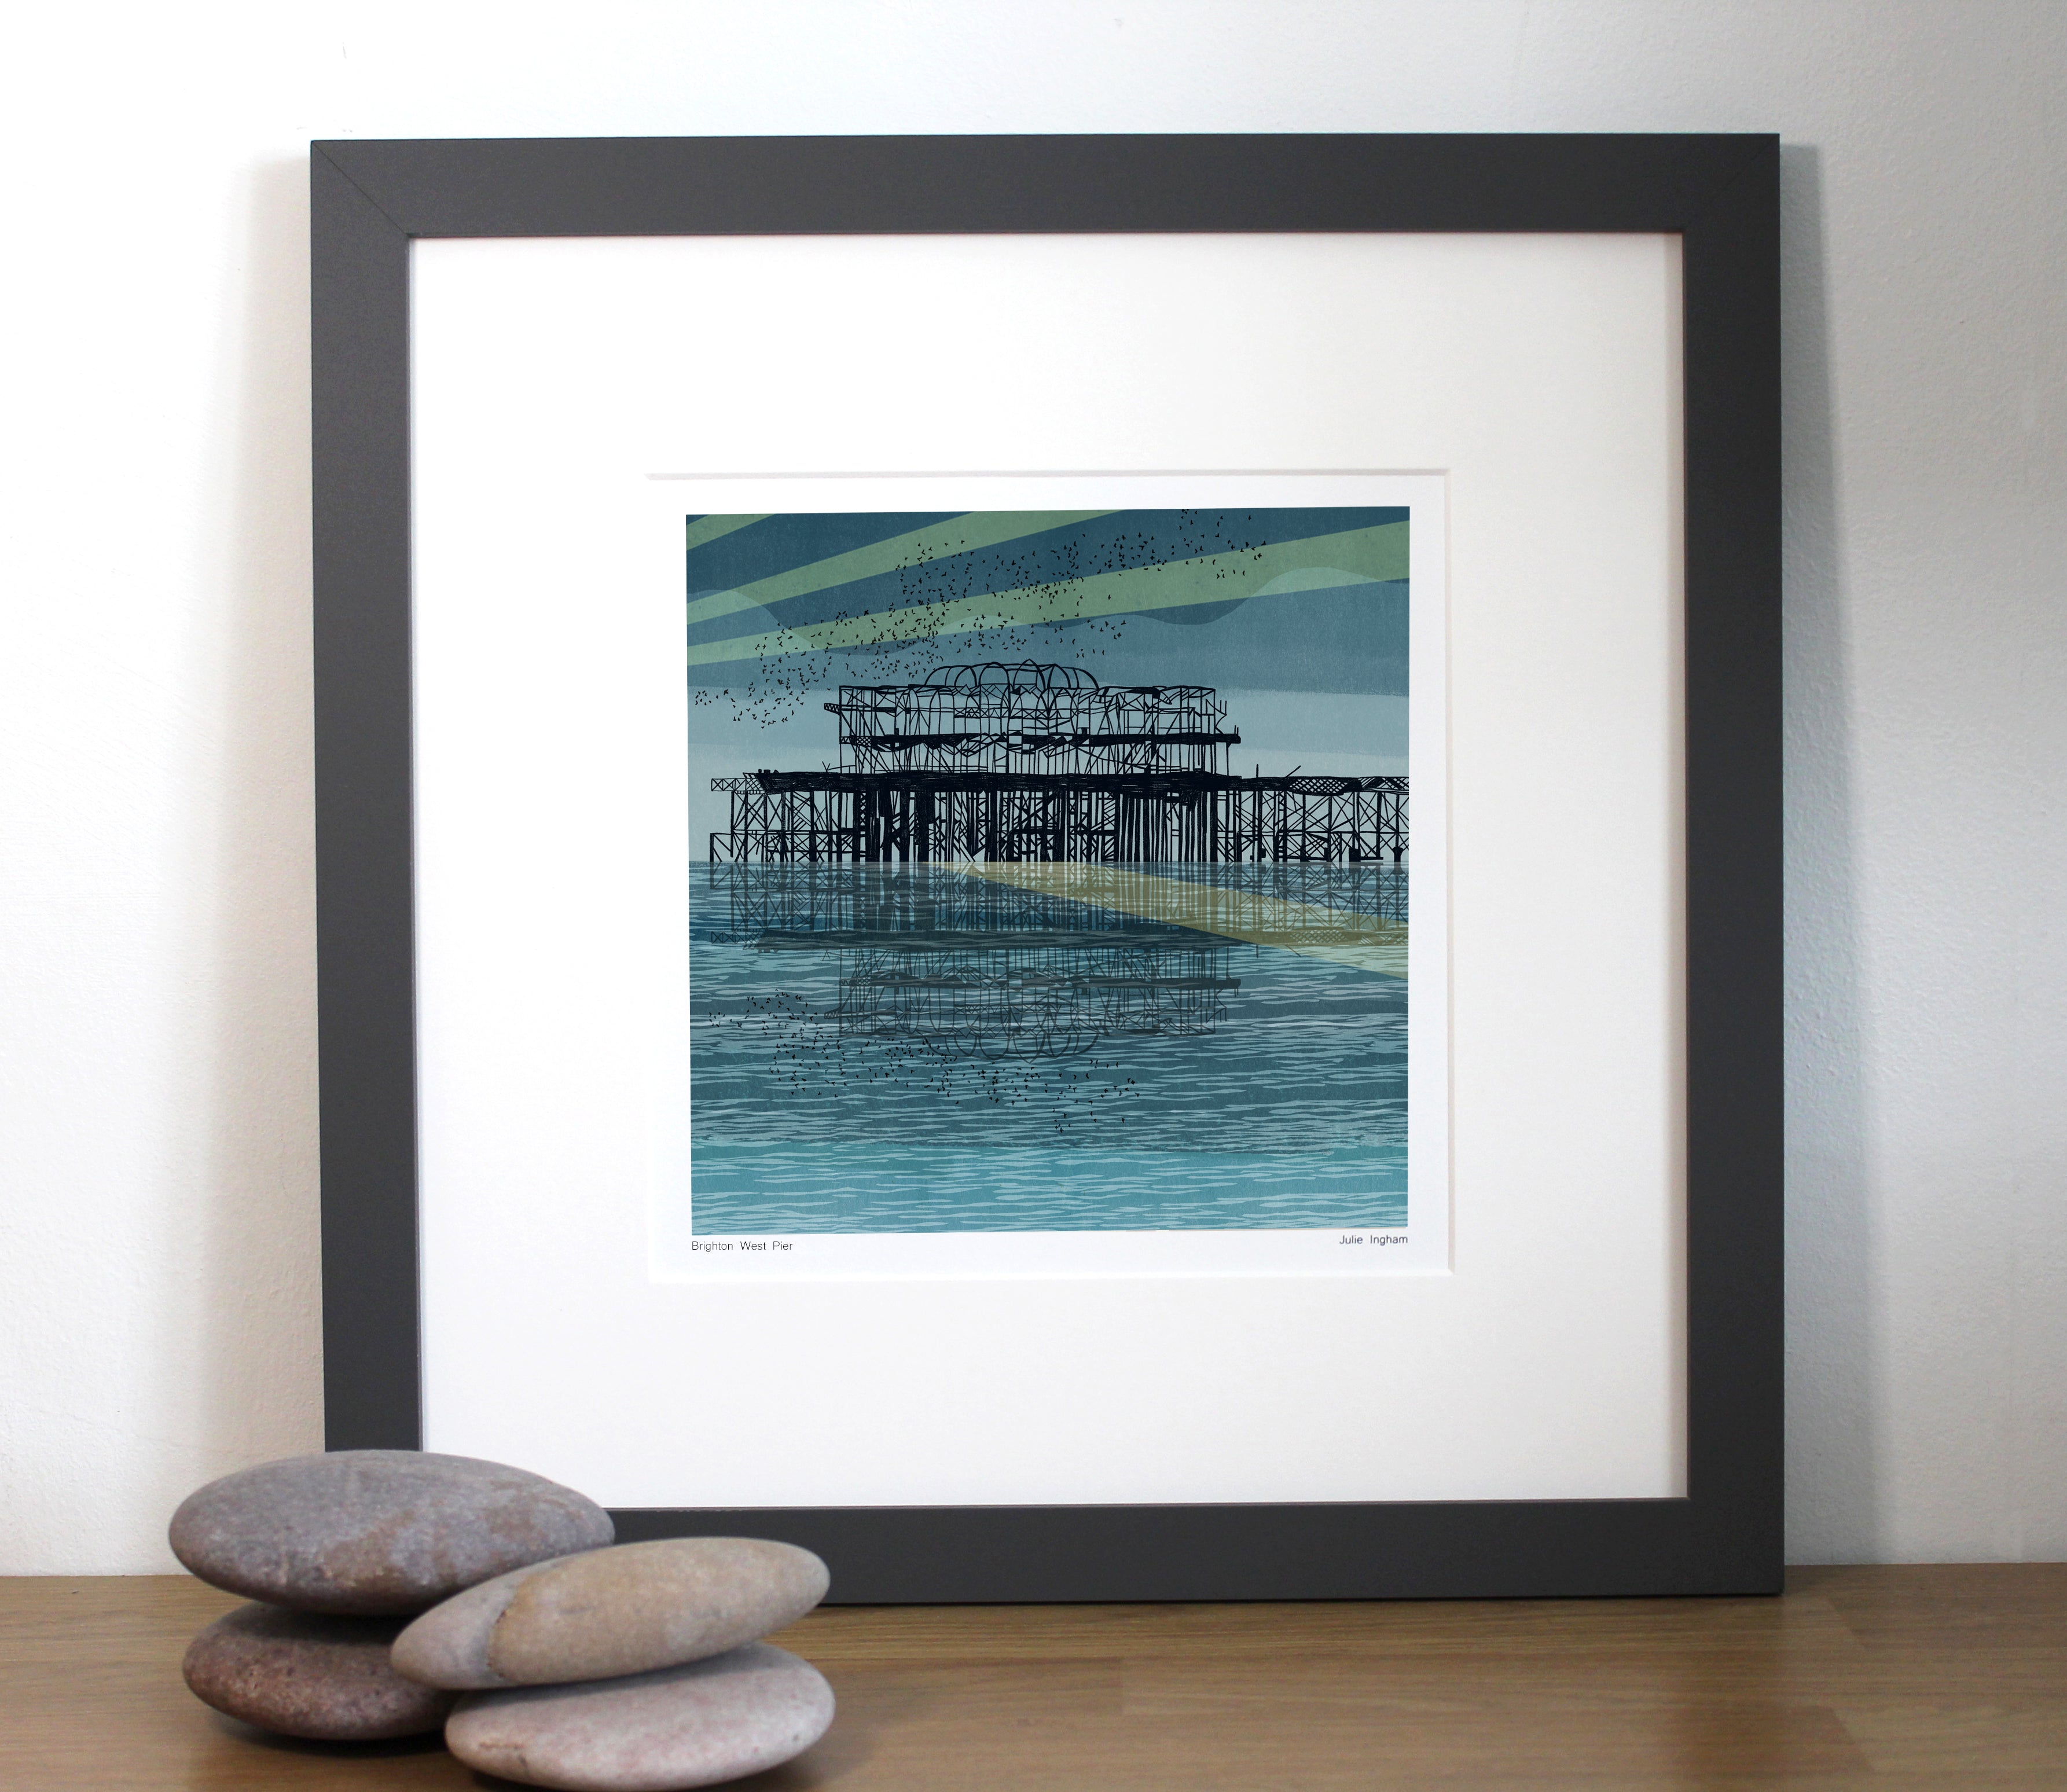 Brighton West Pier Framed Print